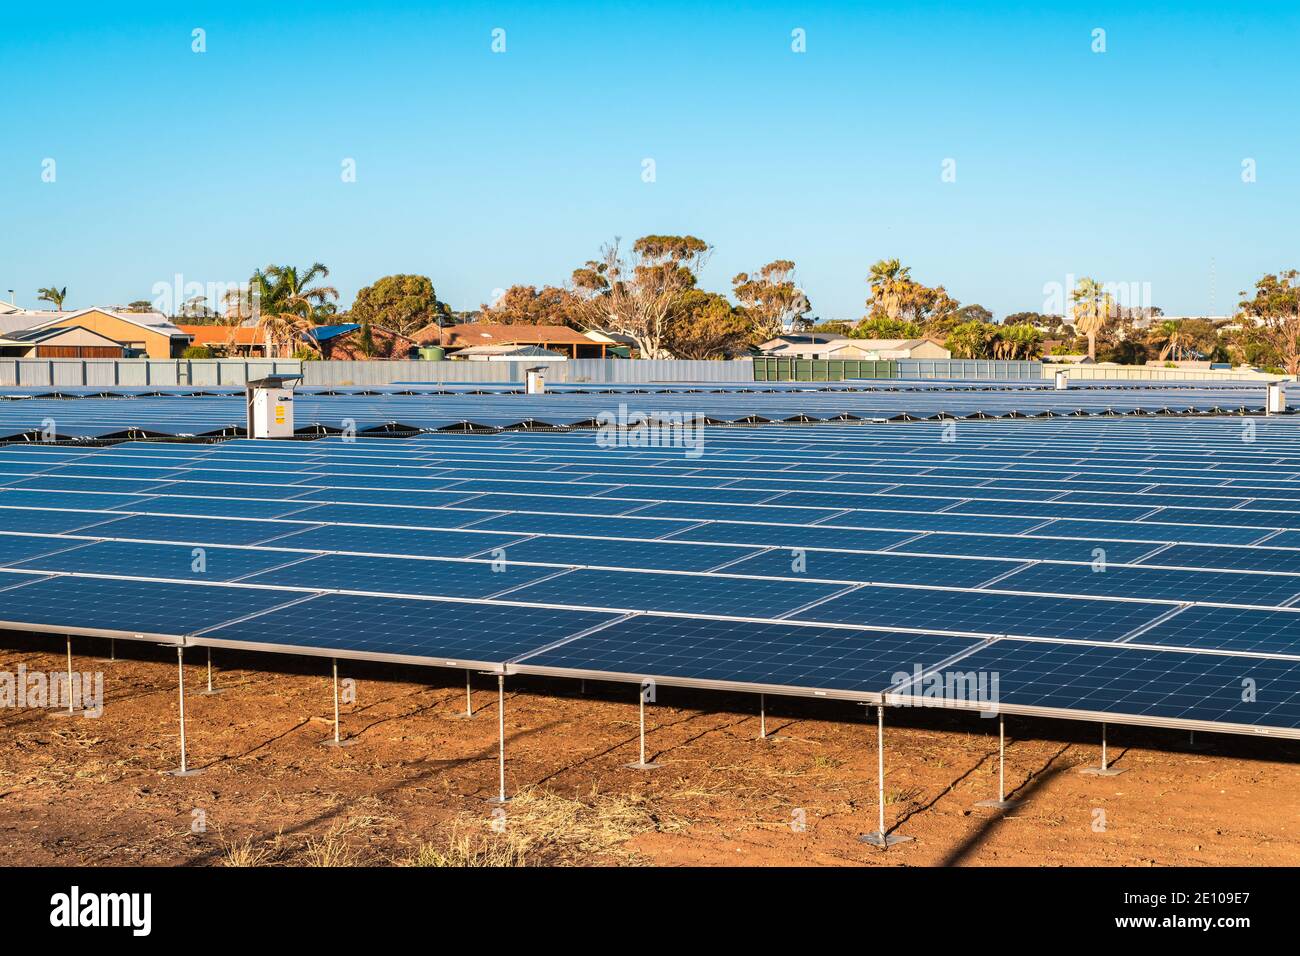 solar-rebates-for-system-installation-south-australia-solar-power